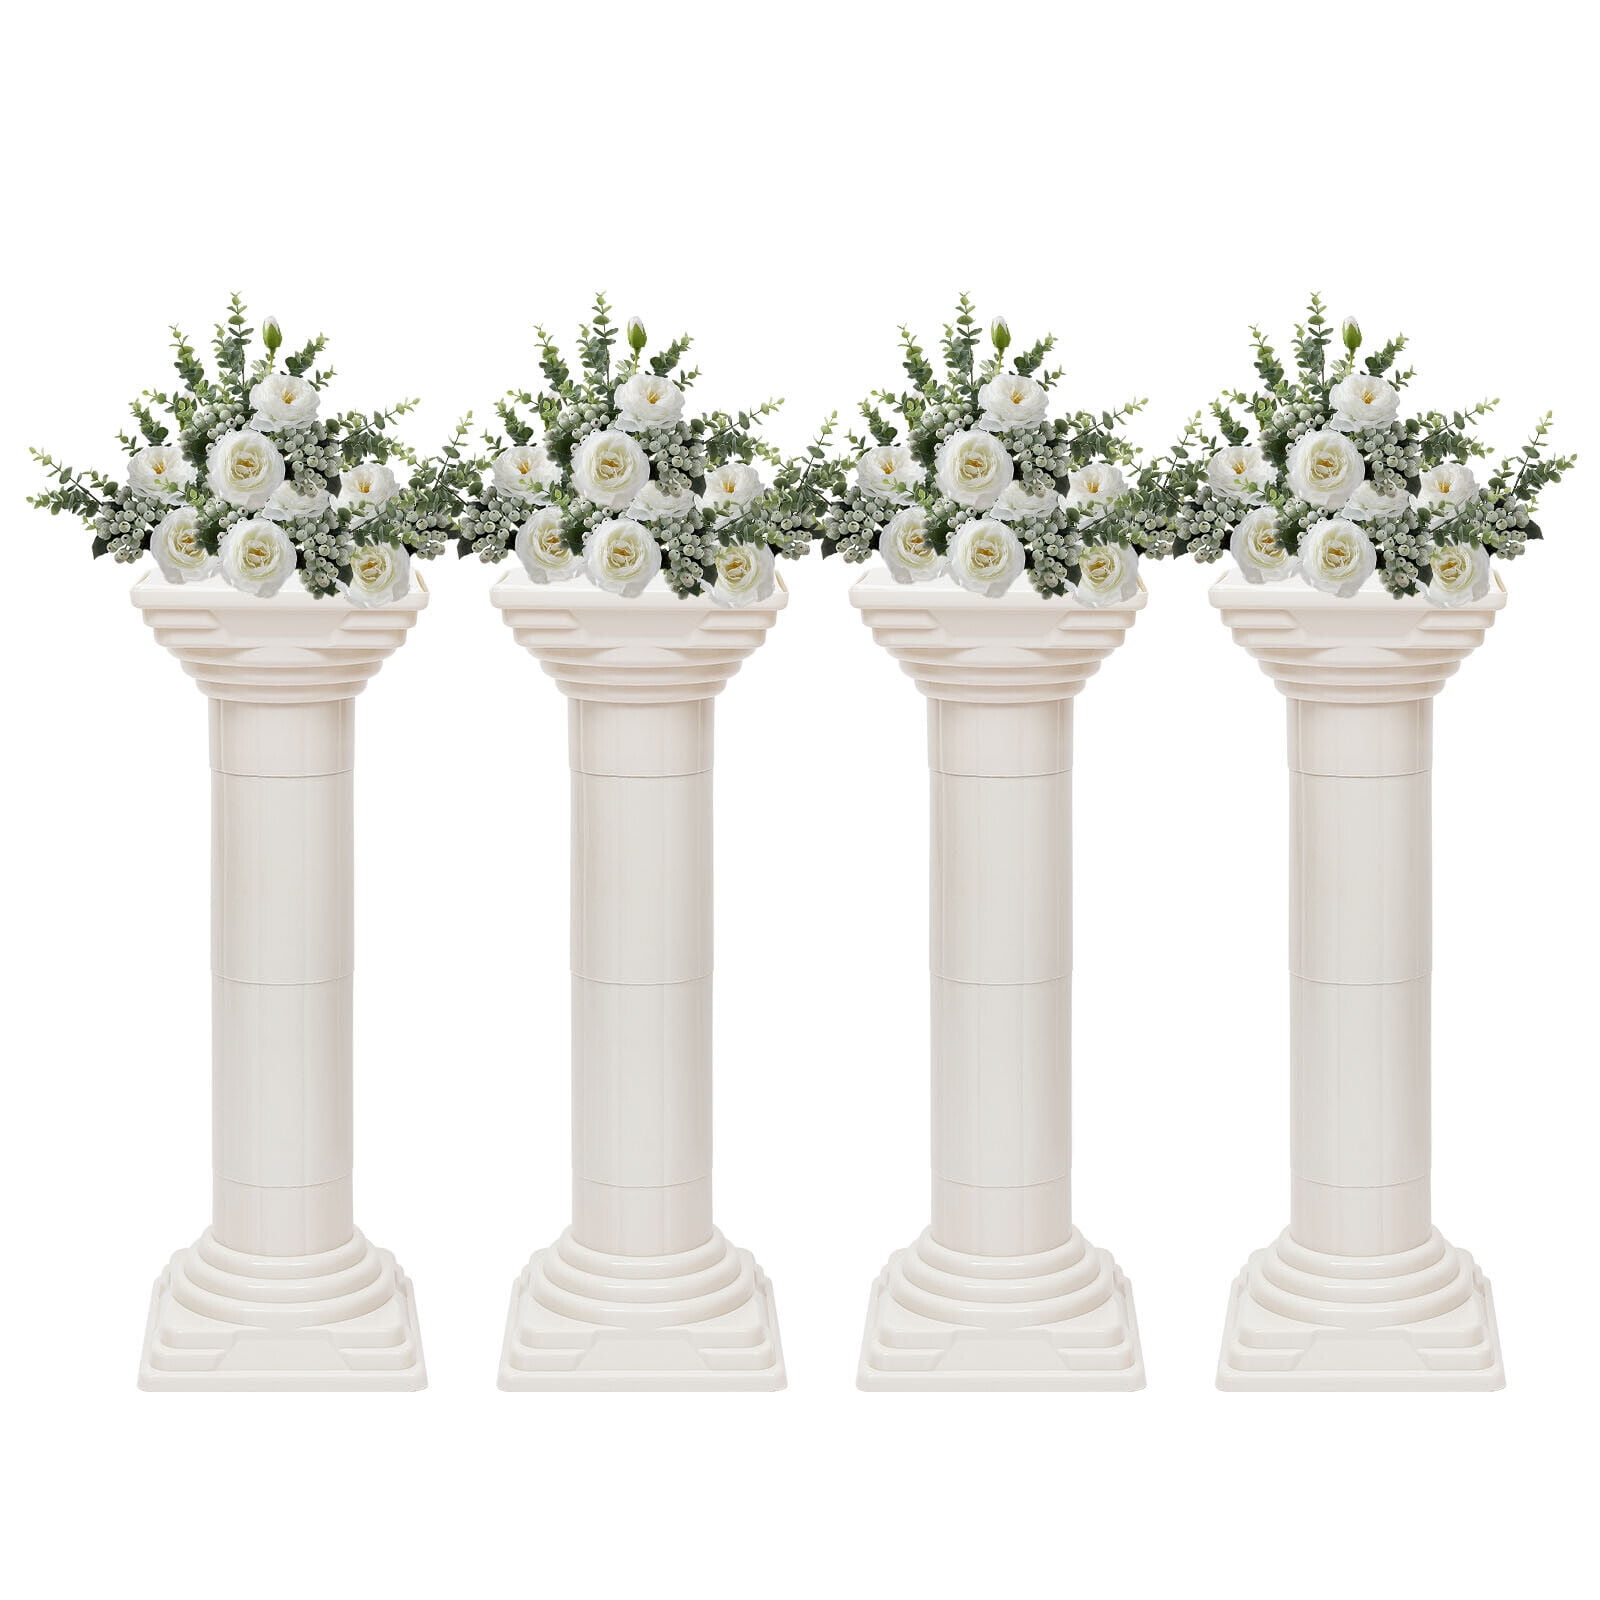 Oukaning 4 Pillars/Set Wedding Event Decorative Roman column 3-inch Tall  Columns Garden Venue Decor Set For Wedding Arch Wedding